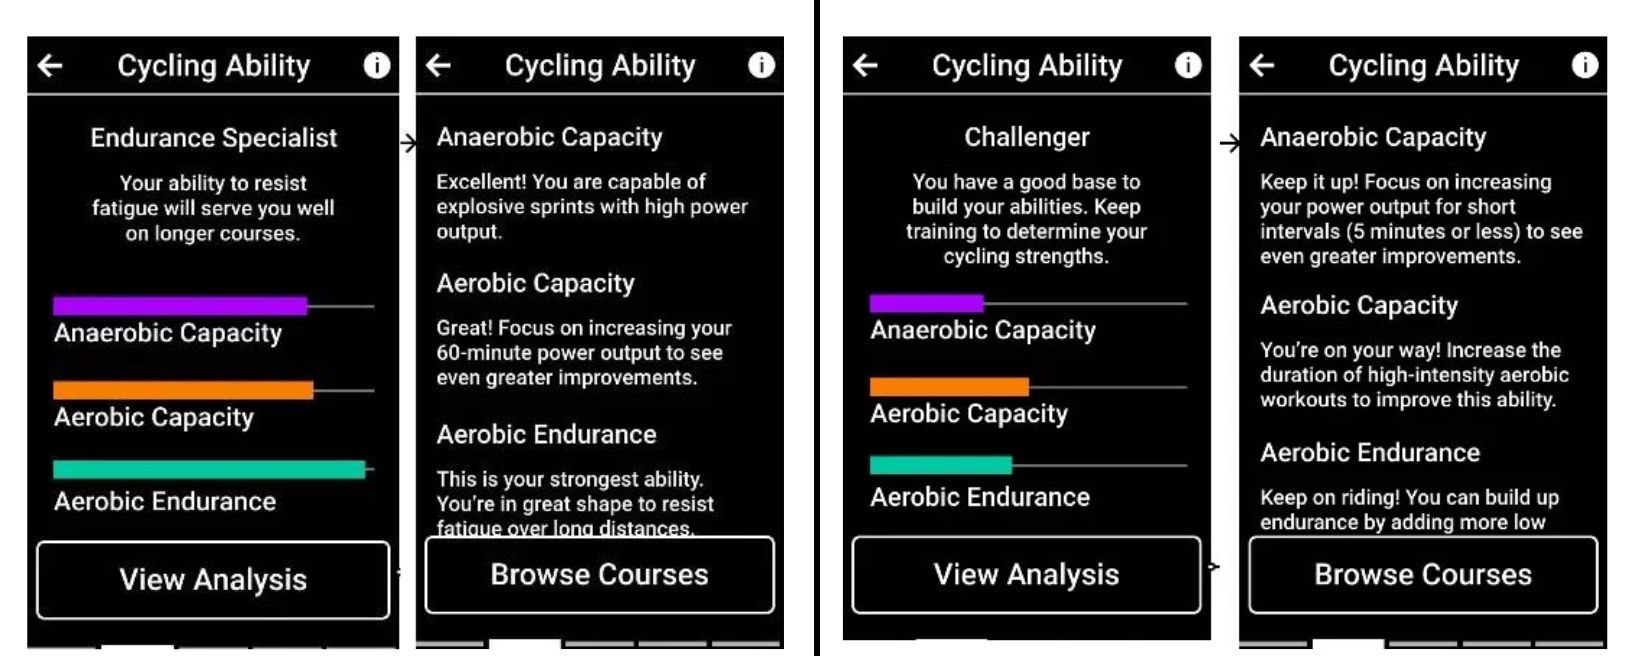 Garmin Edge verschillende rijdersprofielen en cycling ability